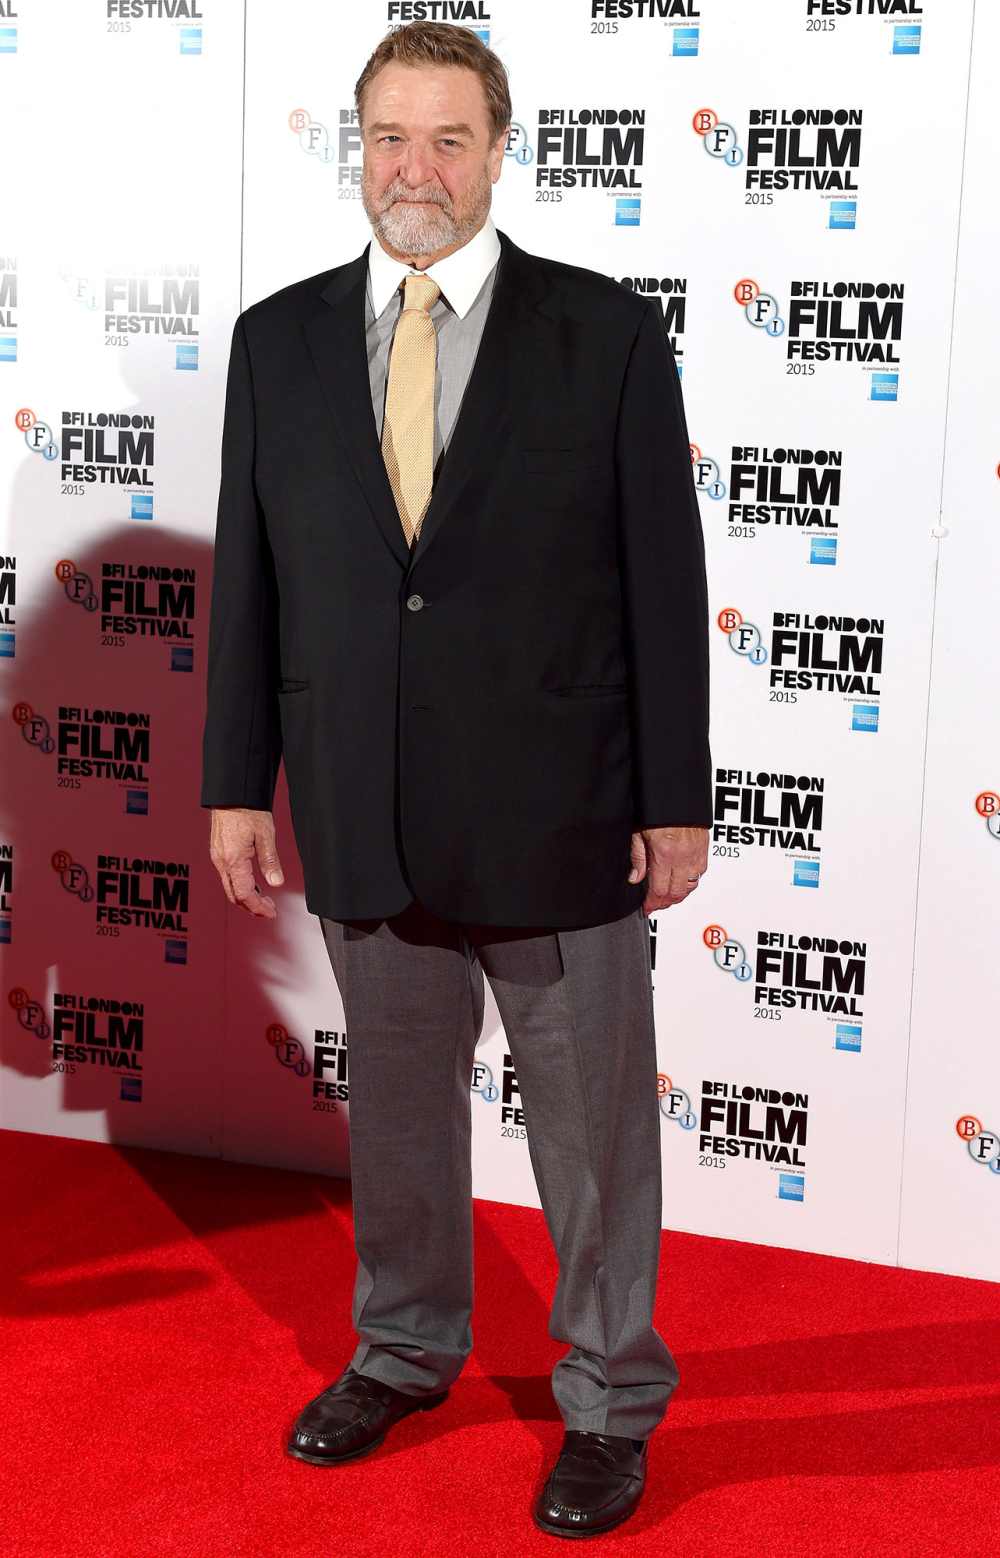 John Goodman attends a photocall for